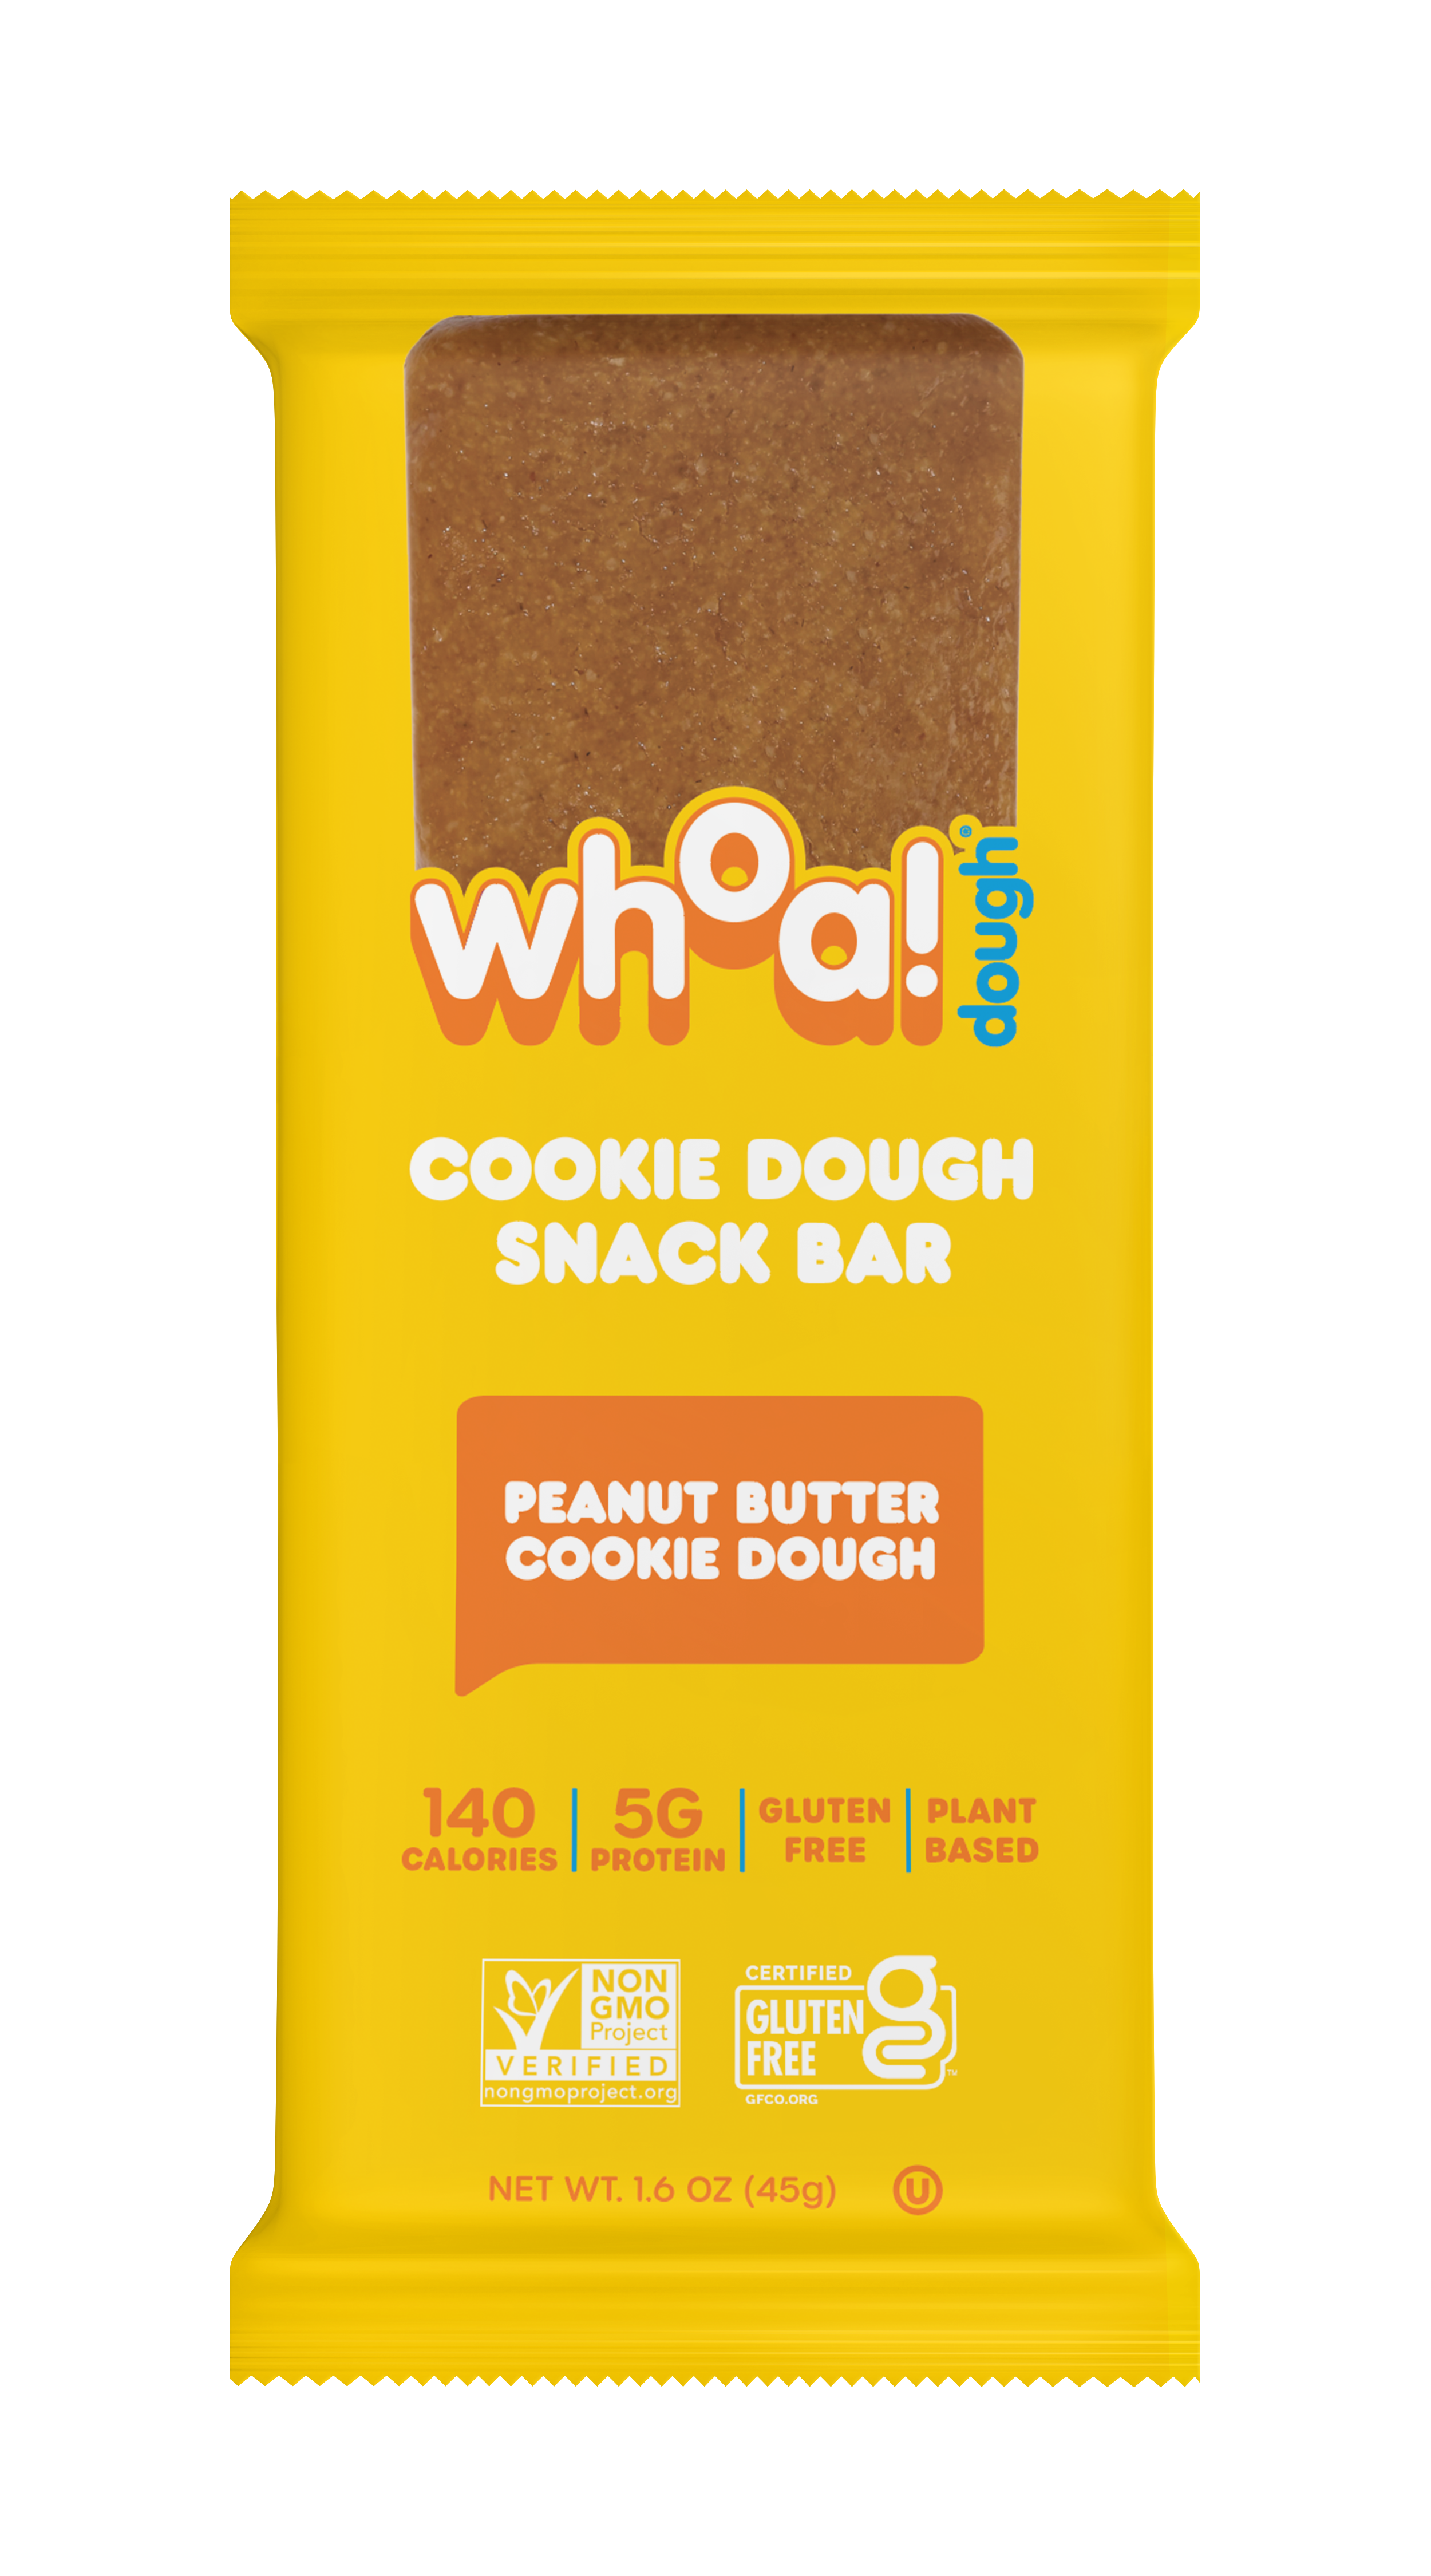 Peanut Butter Cookie Dough by Whoa Dough